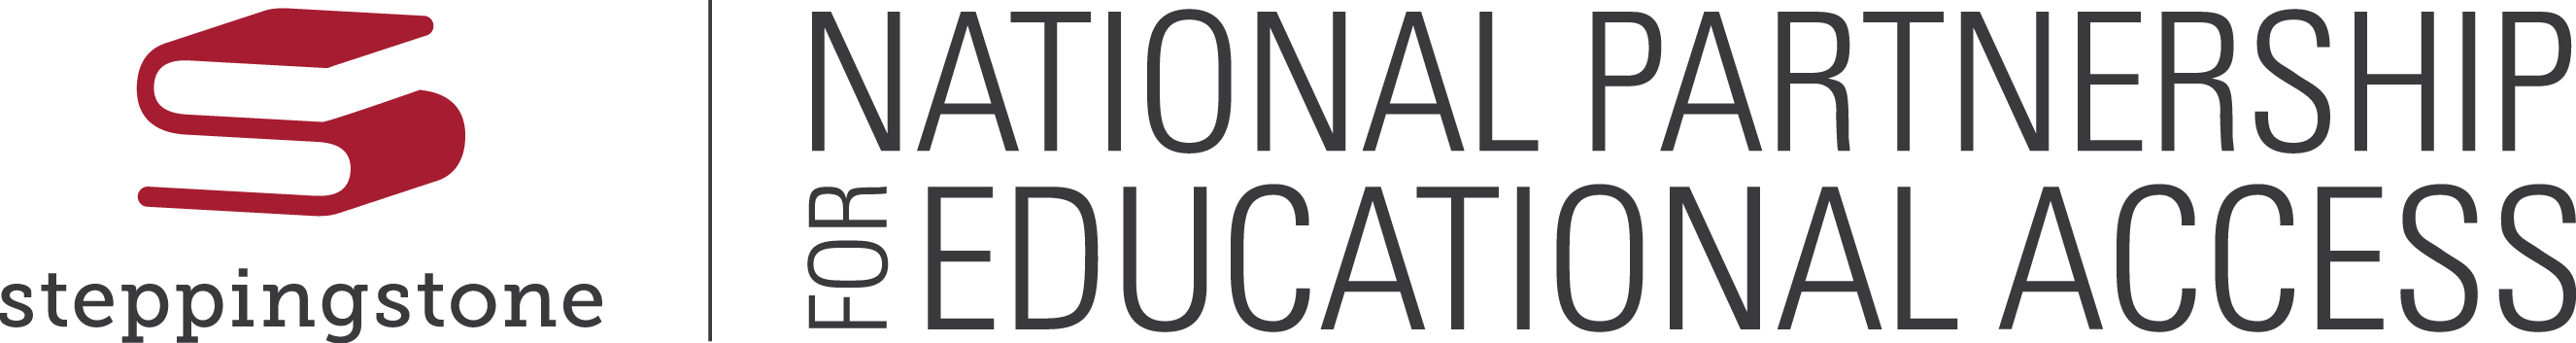 National Partnership for Educational Access (NPEA)